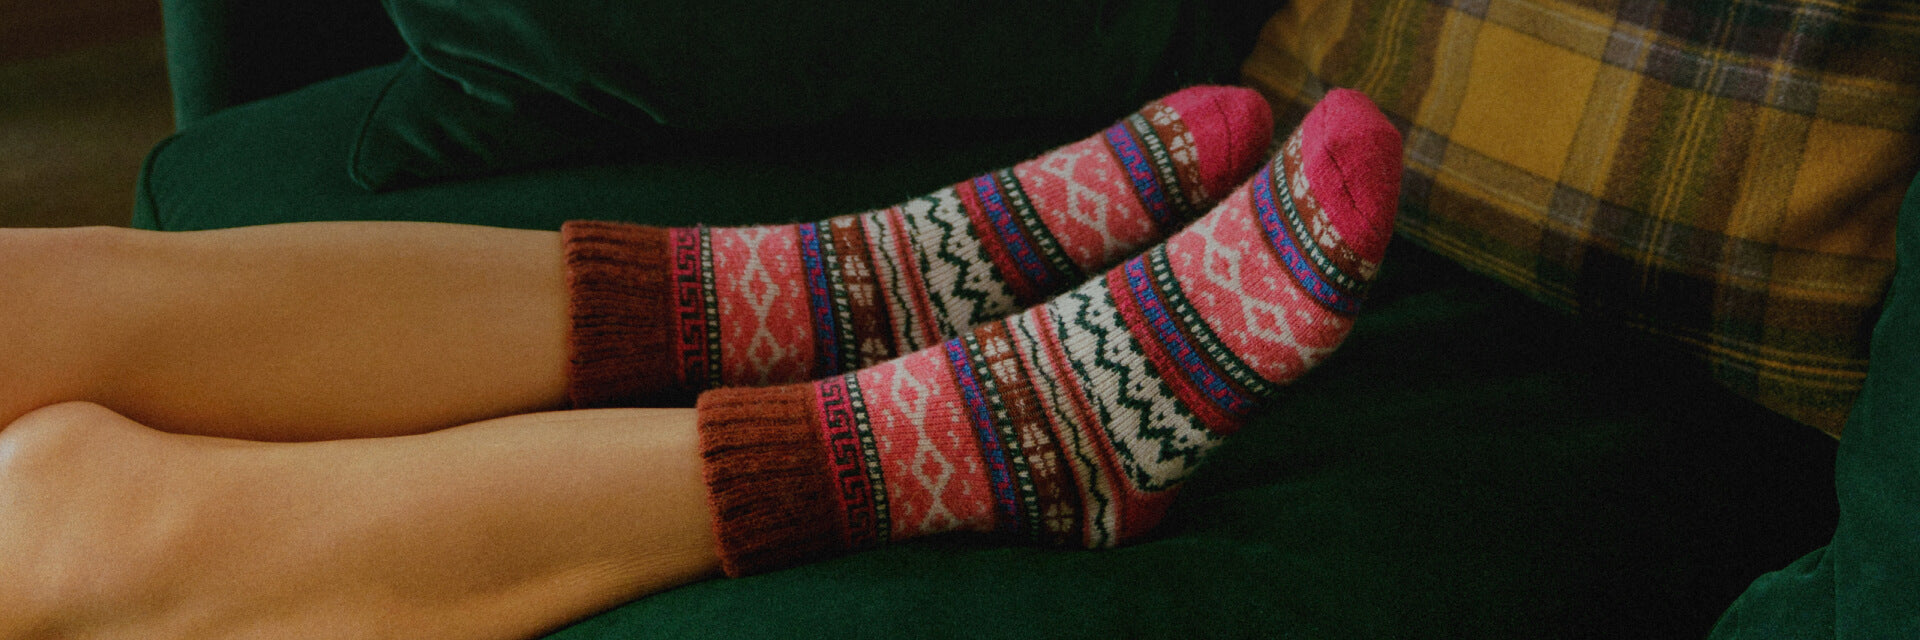 The Nordic Socks